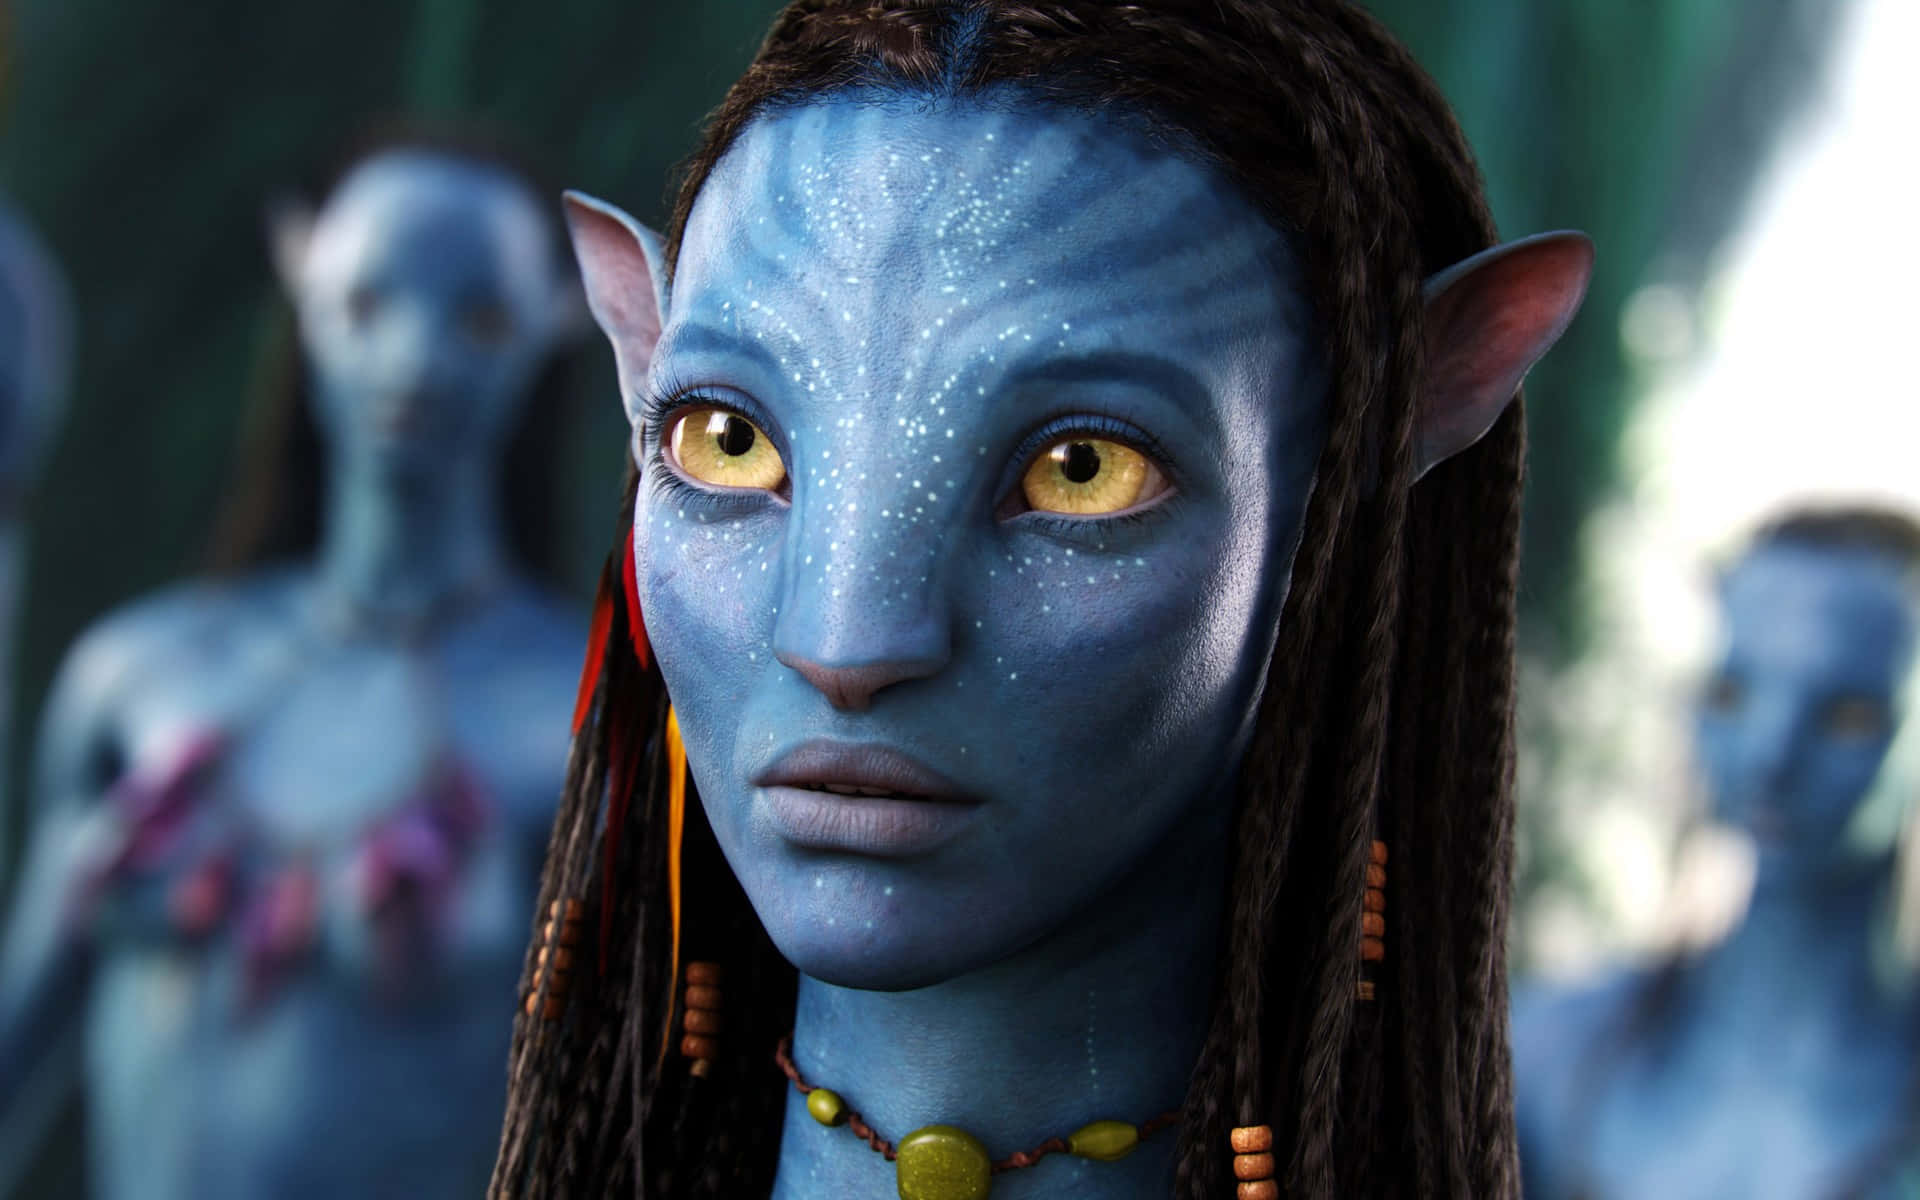 "Jack and Neytiri from Avatar"